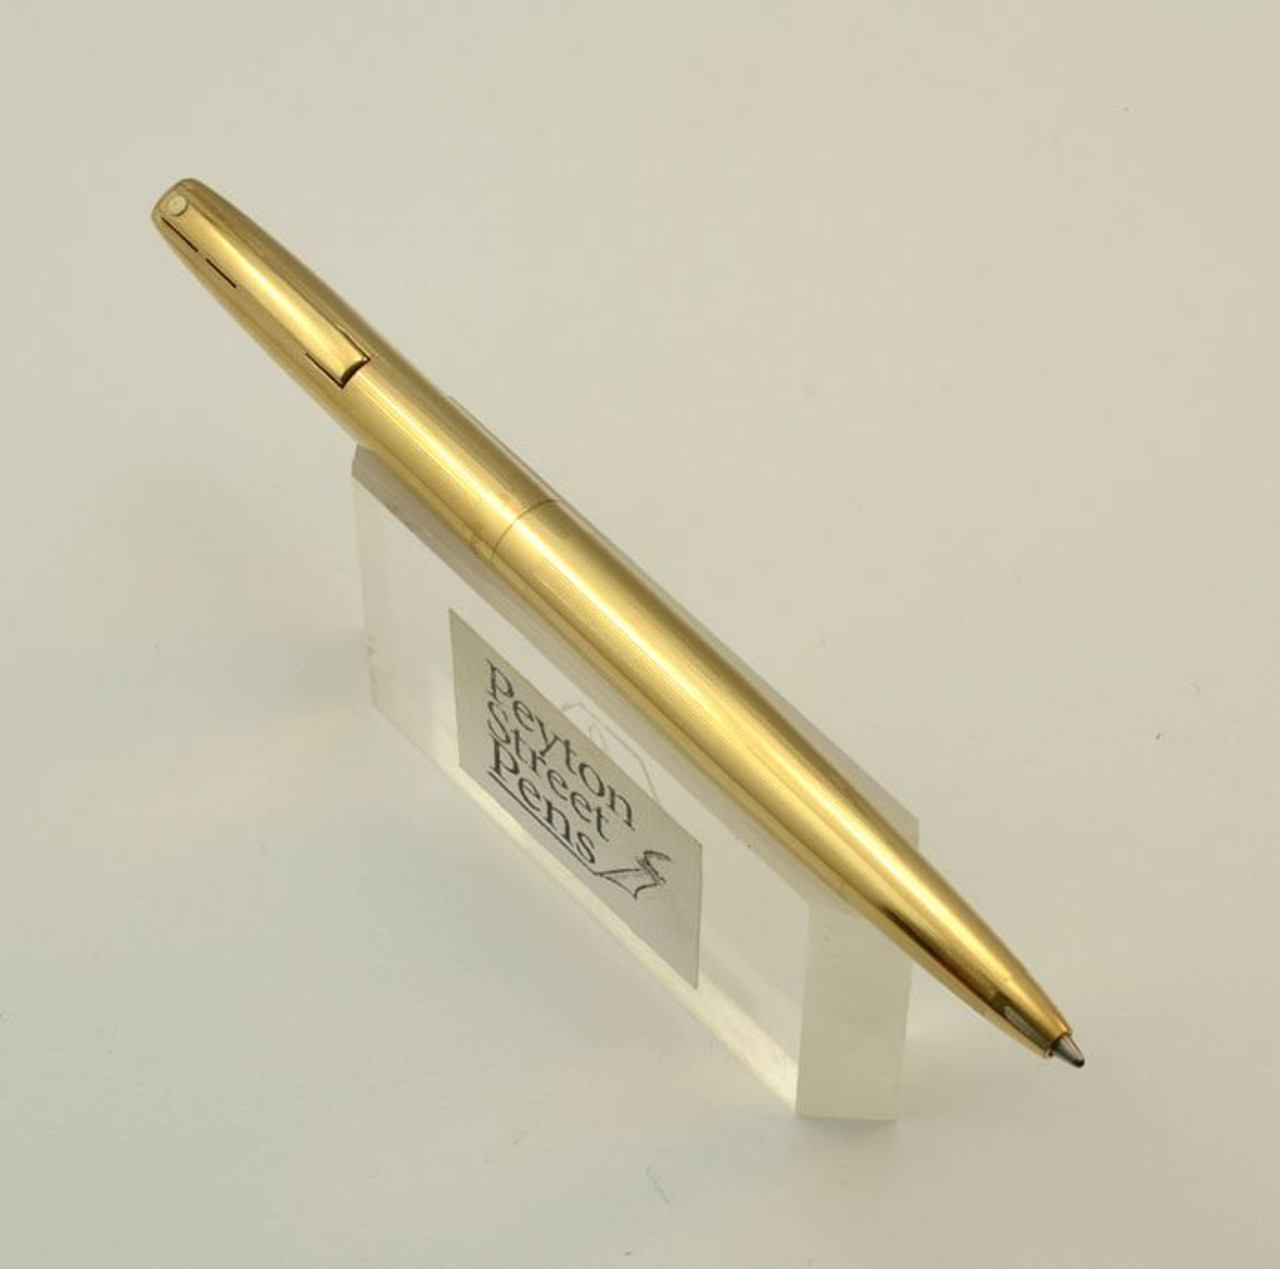 Sheaffer Imperial Ballpoint - 23k Gold Filled "FLH" (Made in Brazil) 6 Lines (Excellent)